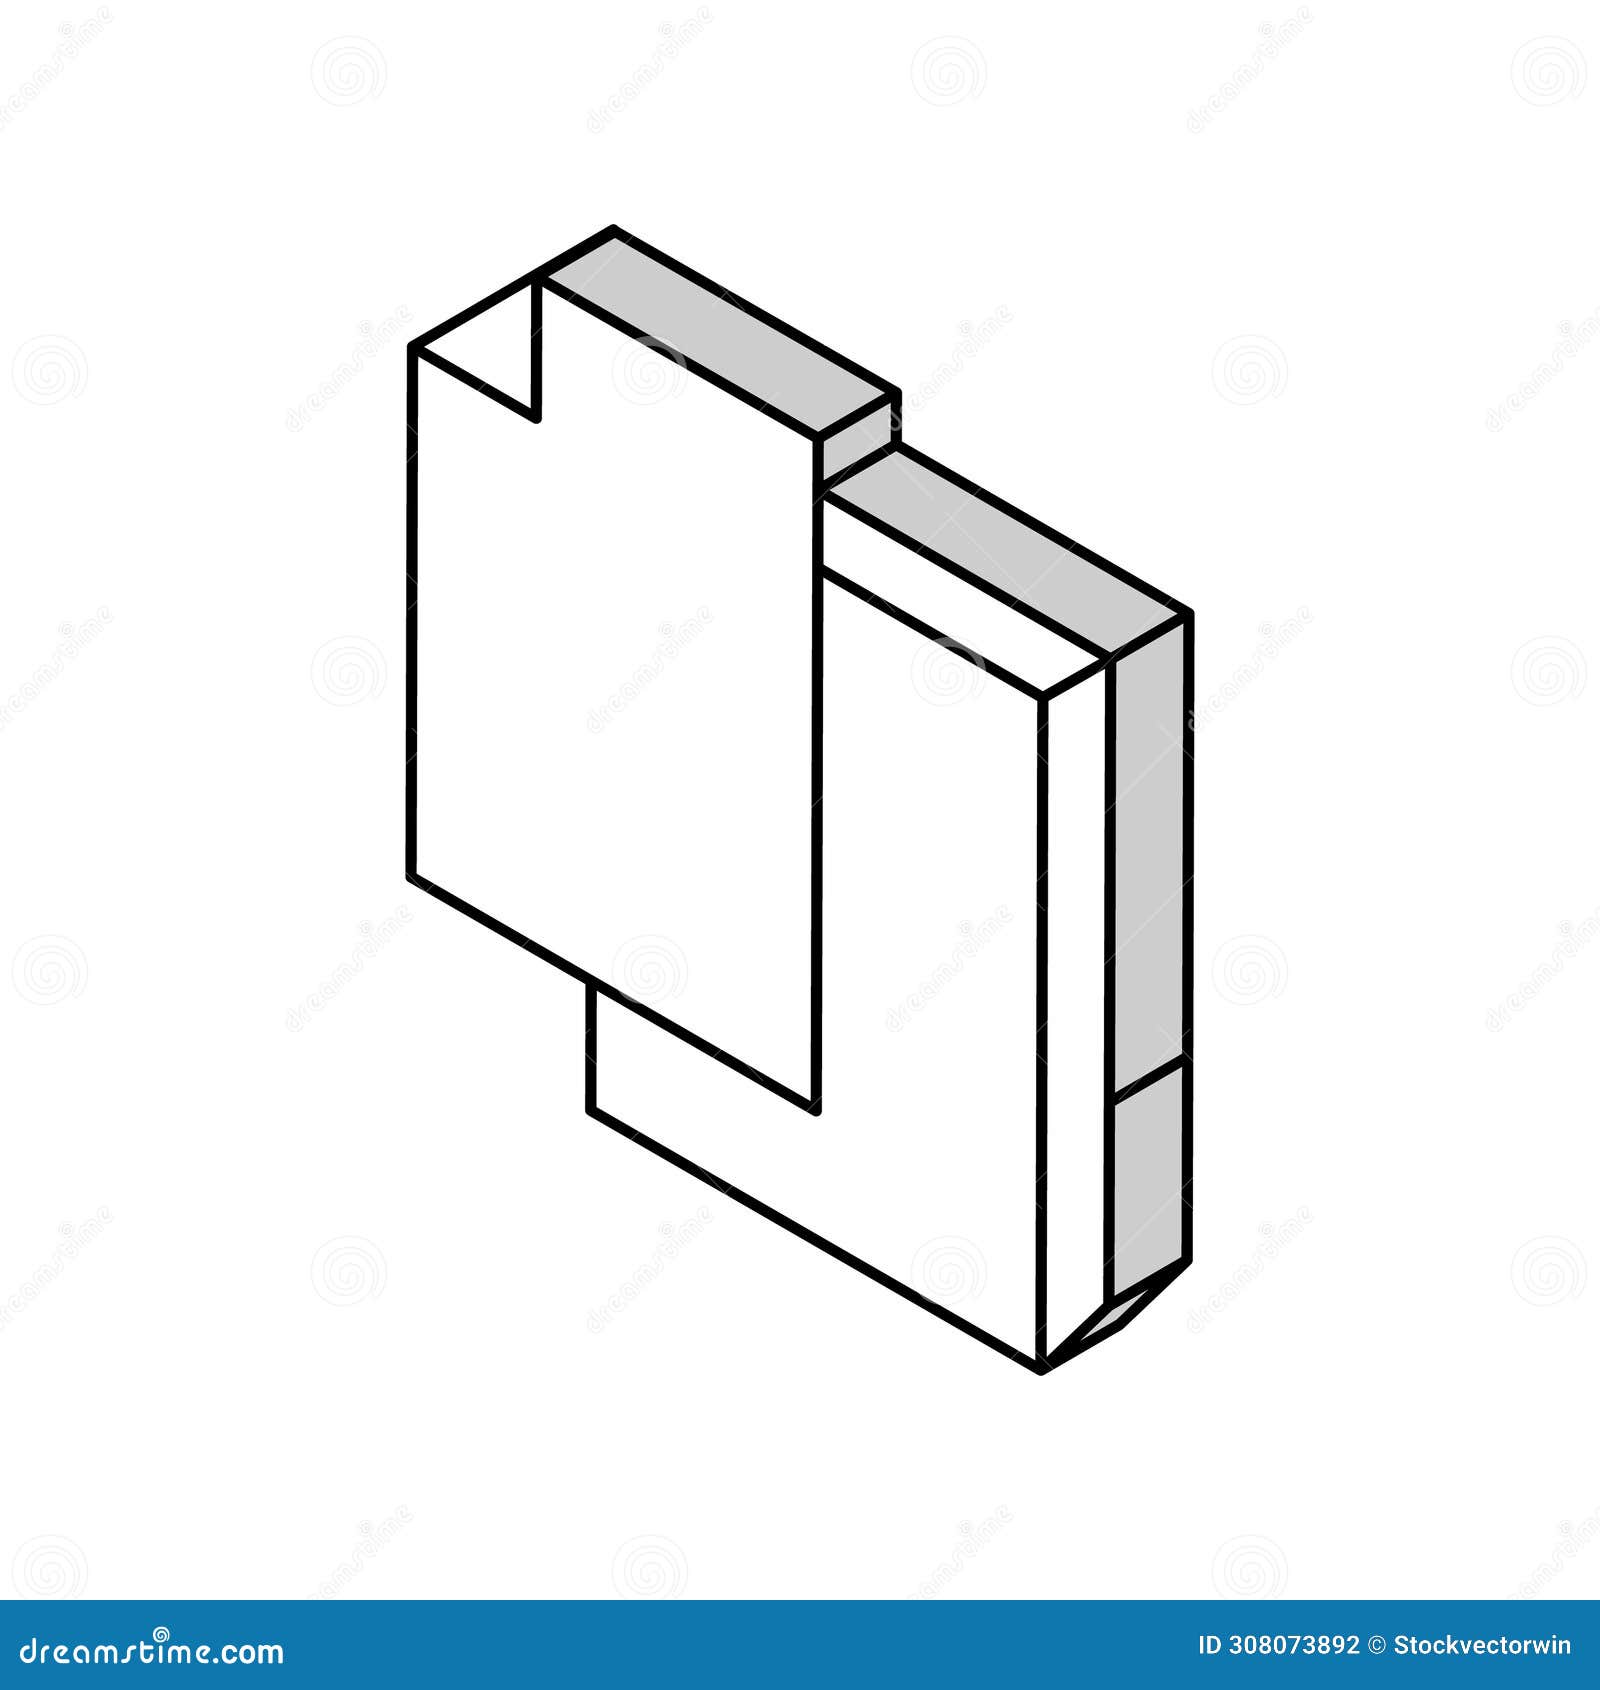 manilla paper isometric icon  